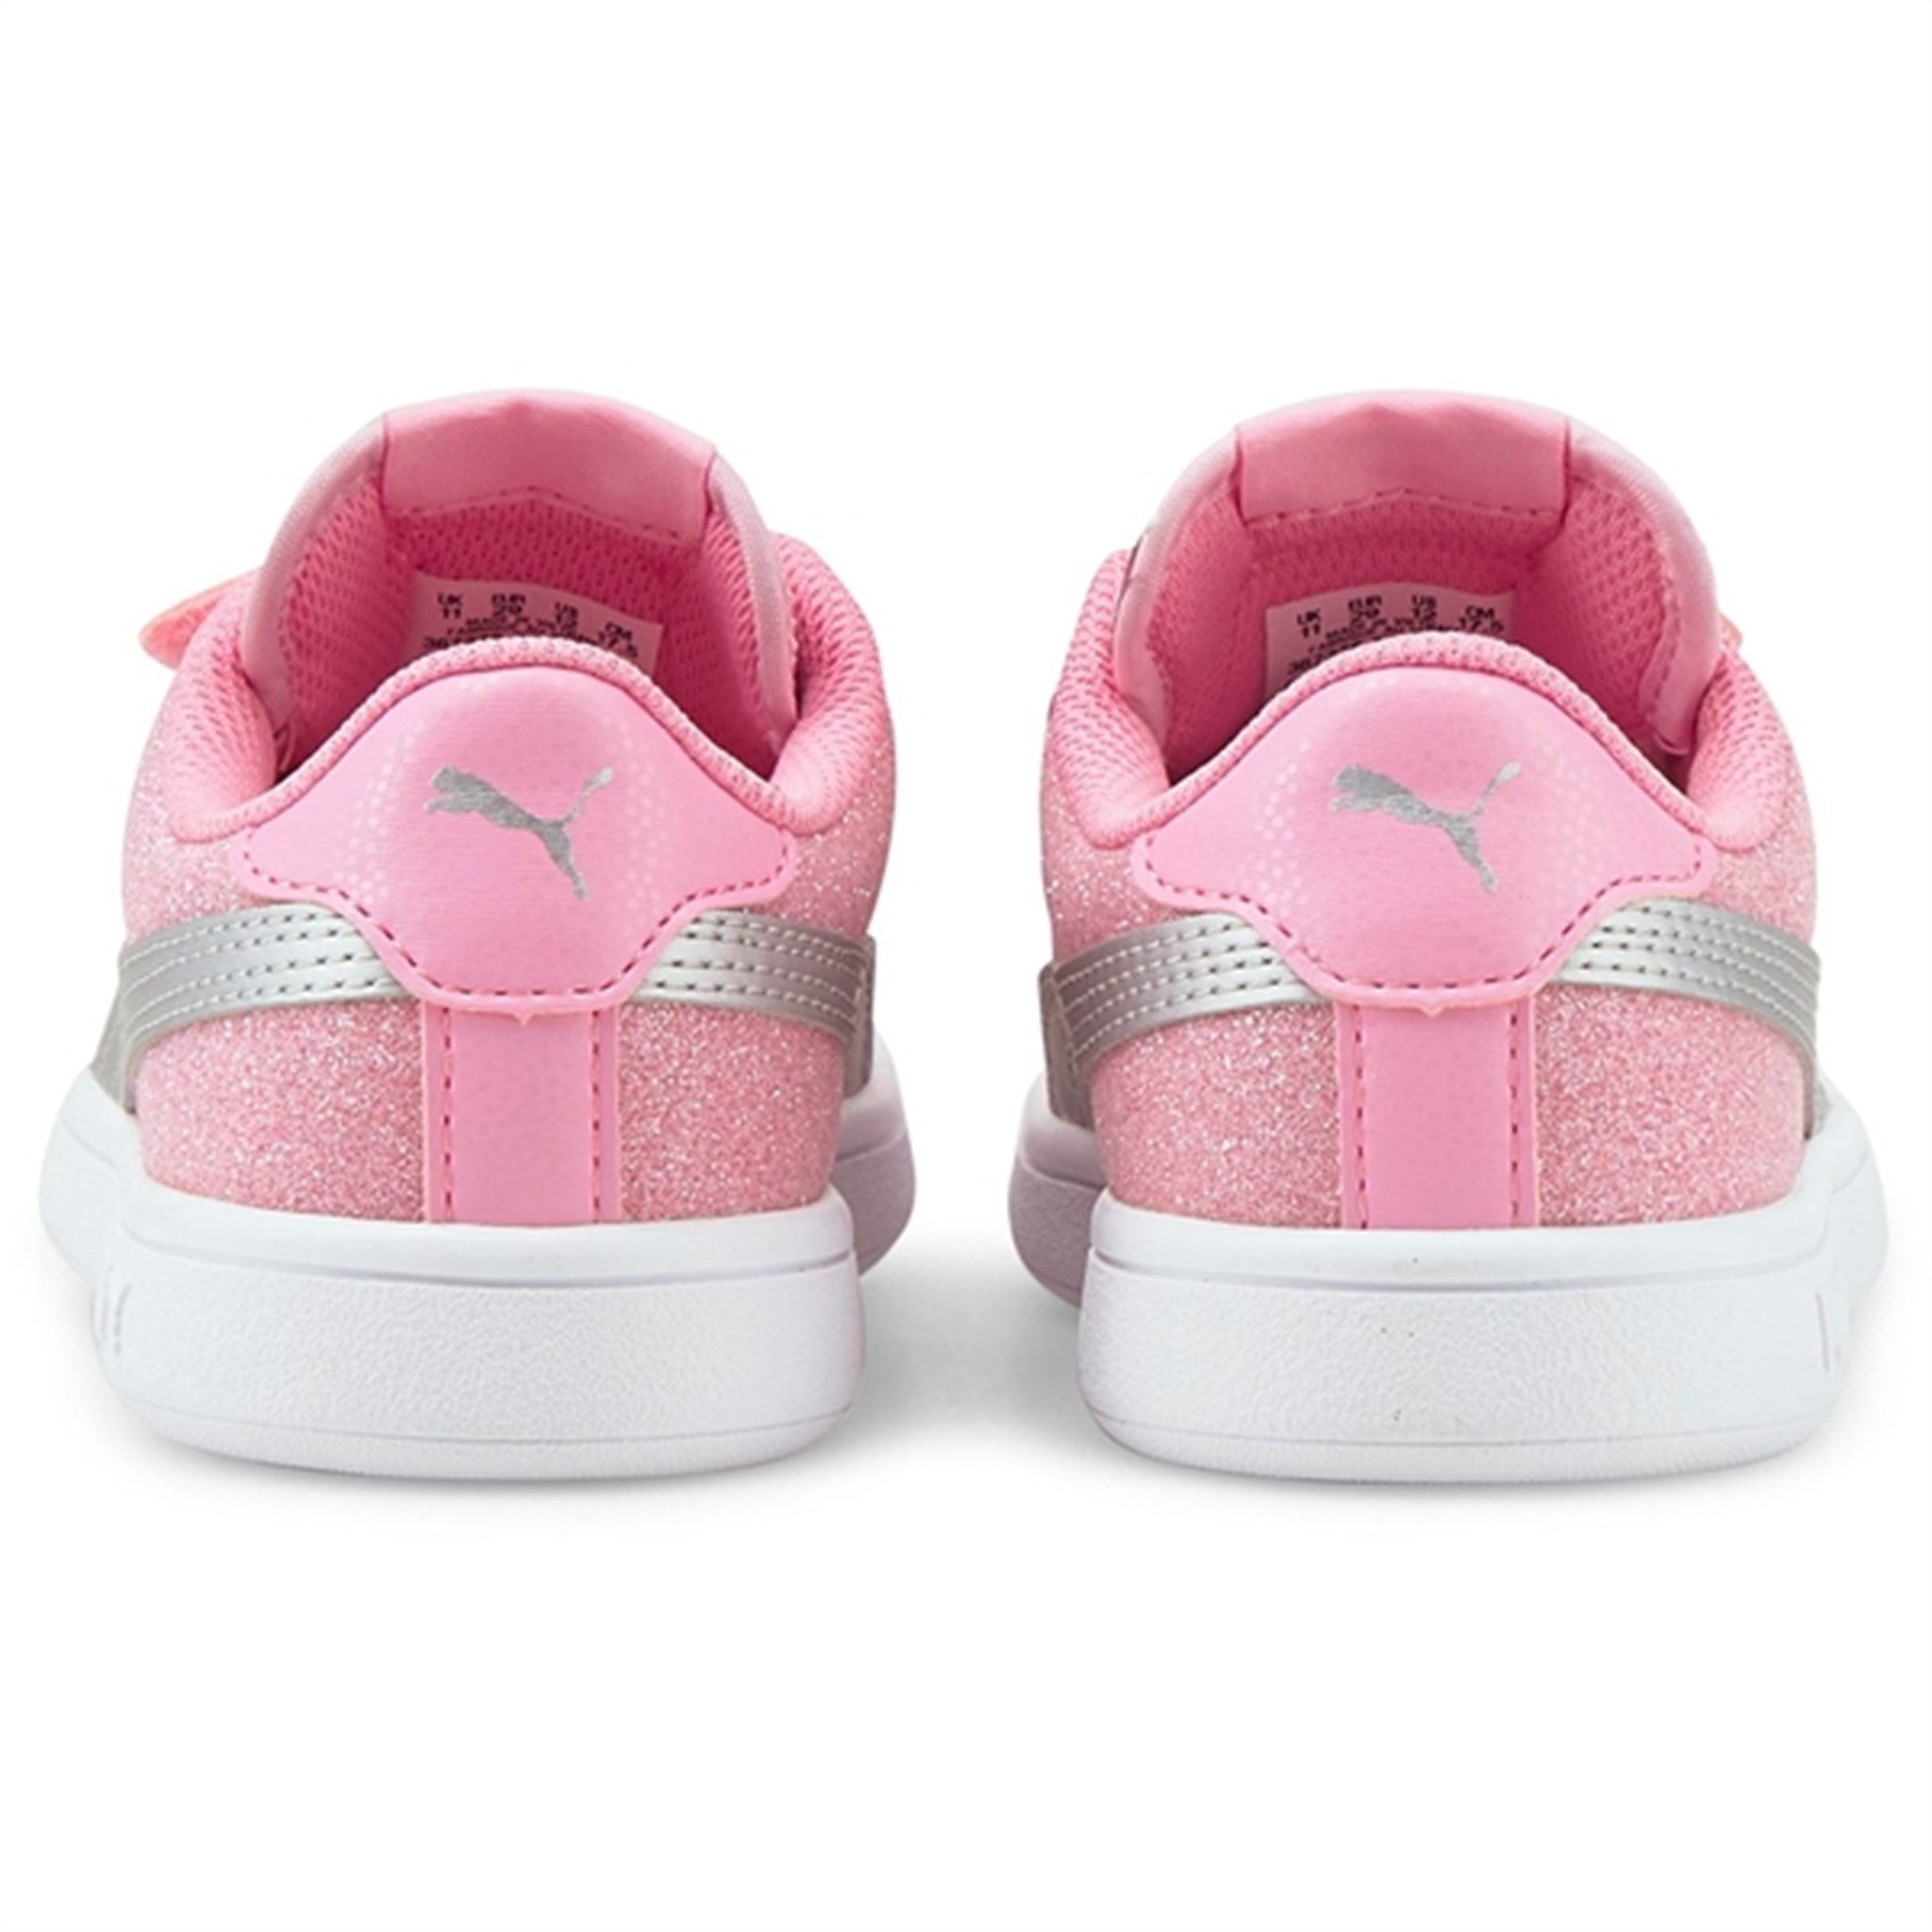 Puma Smash v2 Glitz Glam V PS Sneakers Prism Pink-Silver 6